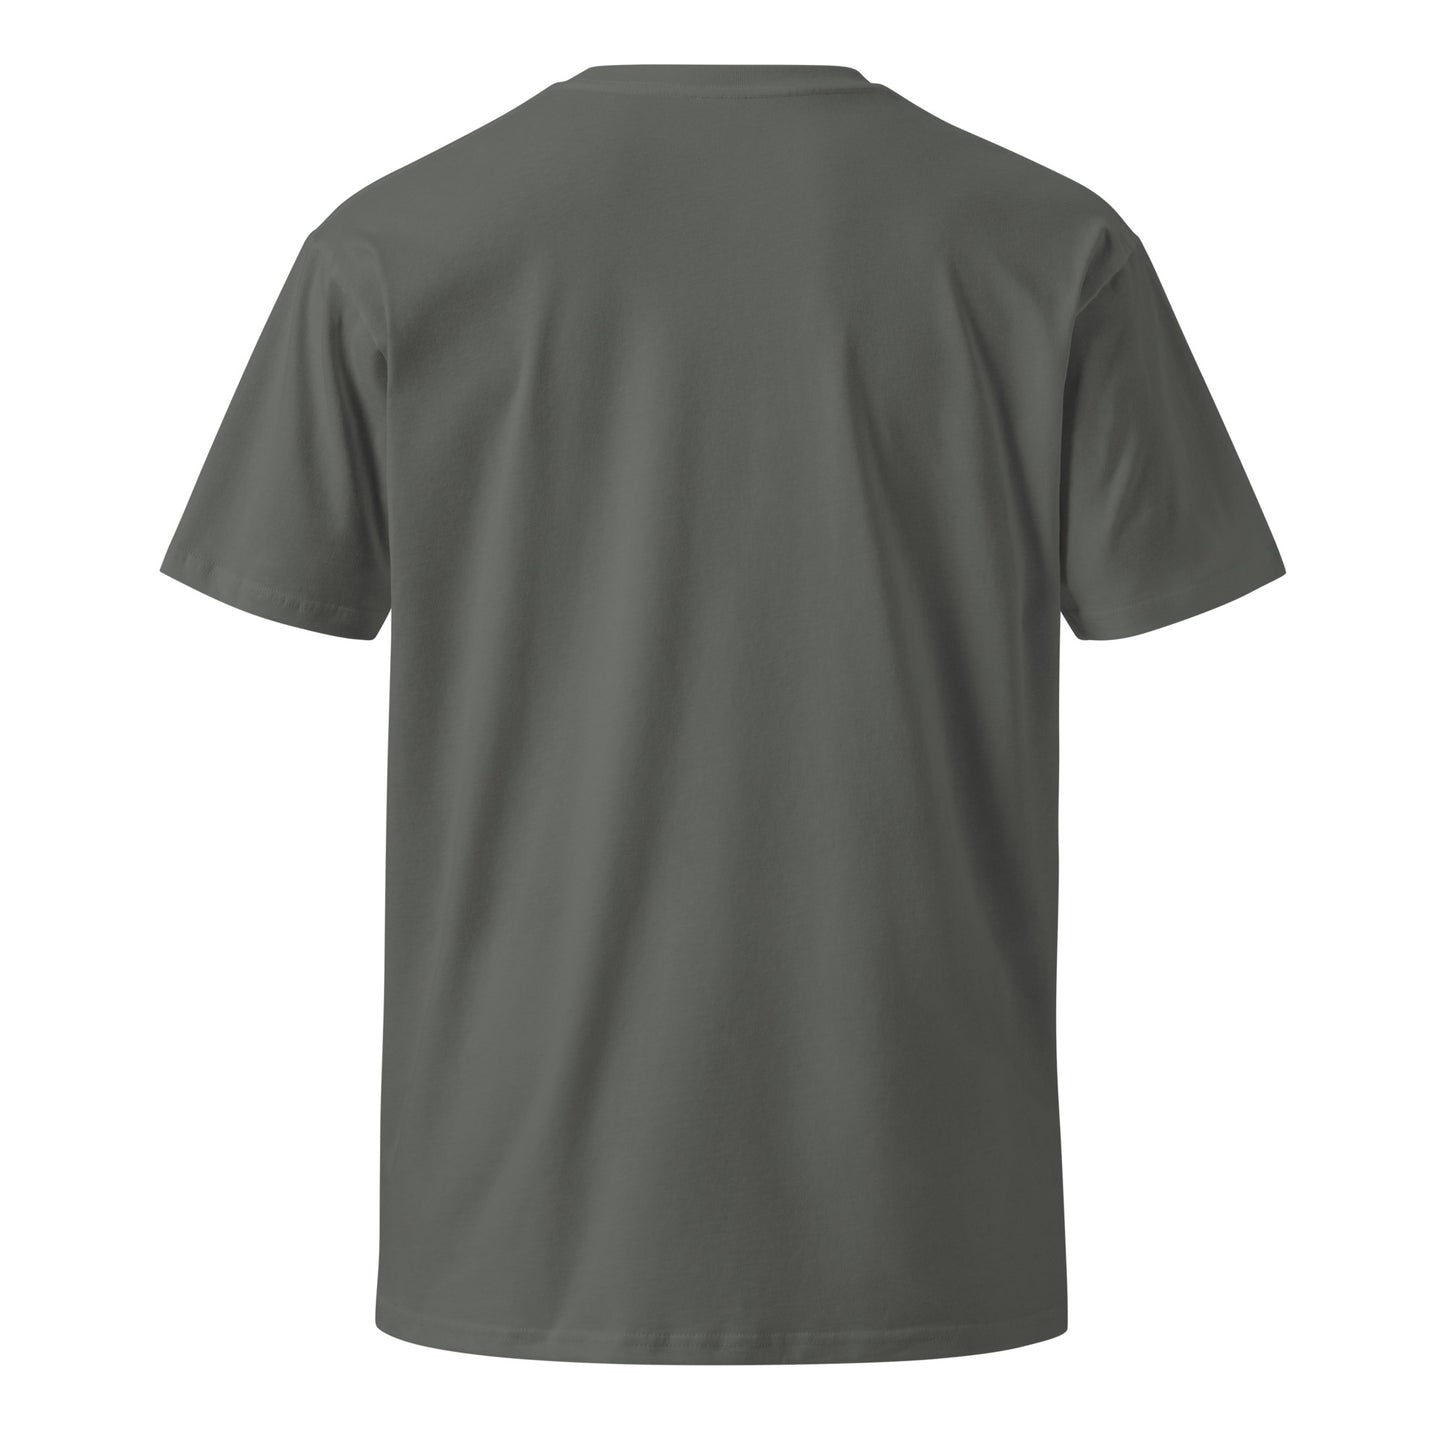 Yurt Brown Art Unisex T-Shirt